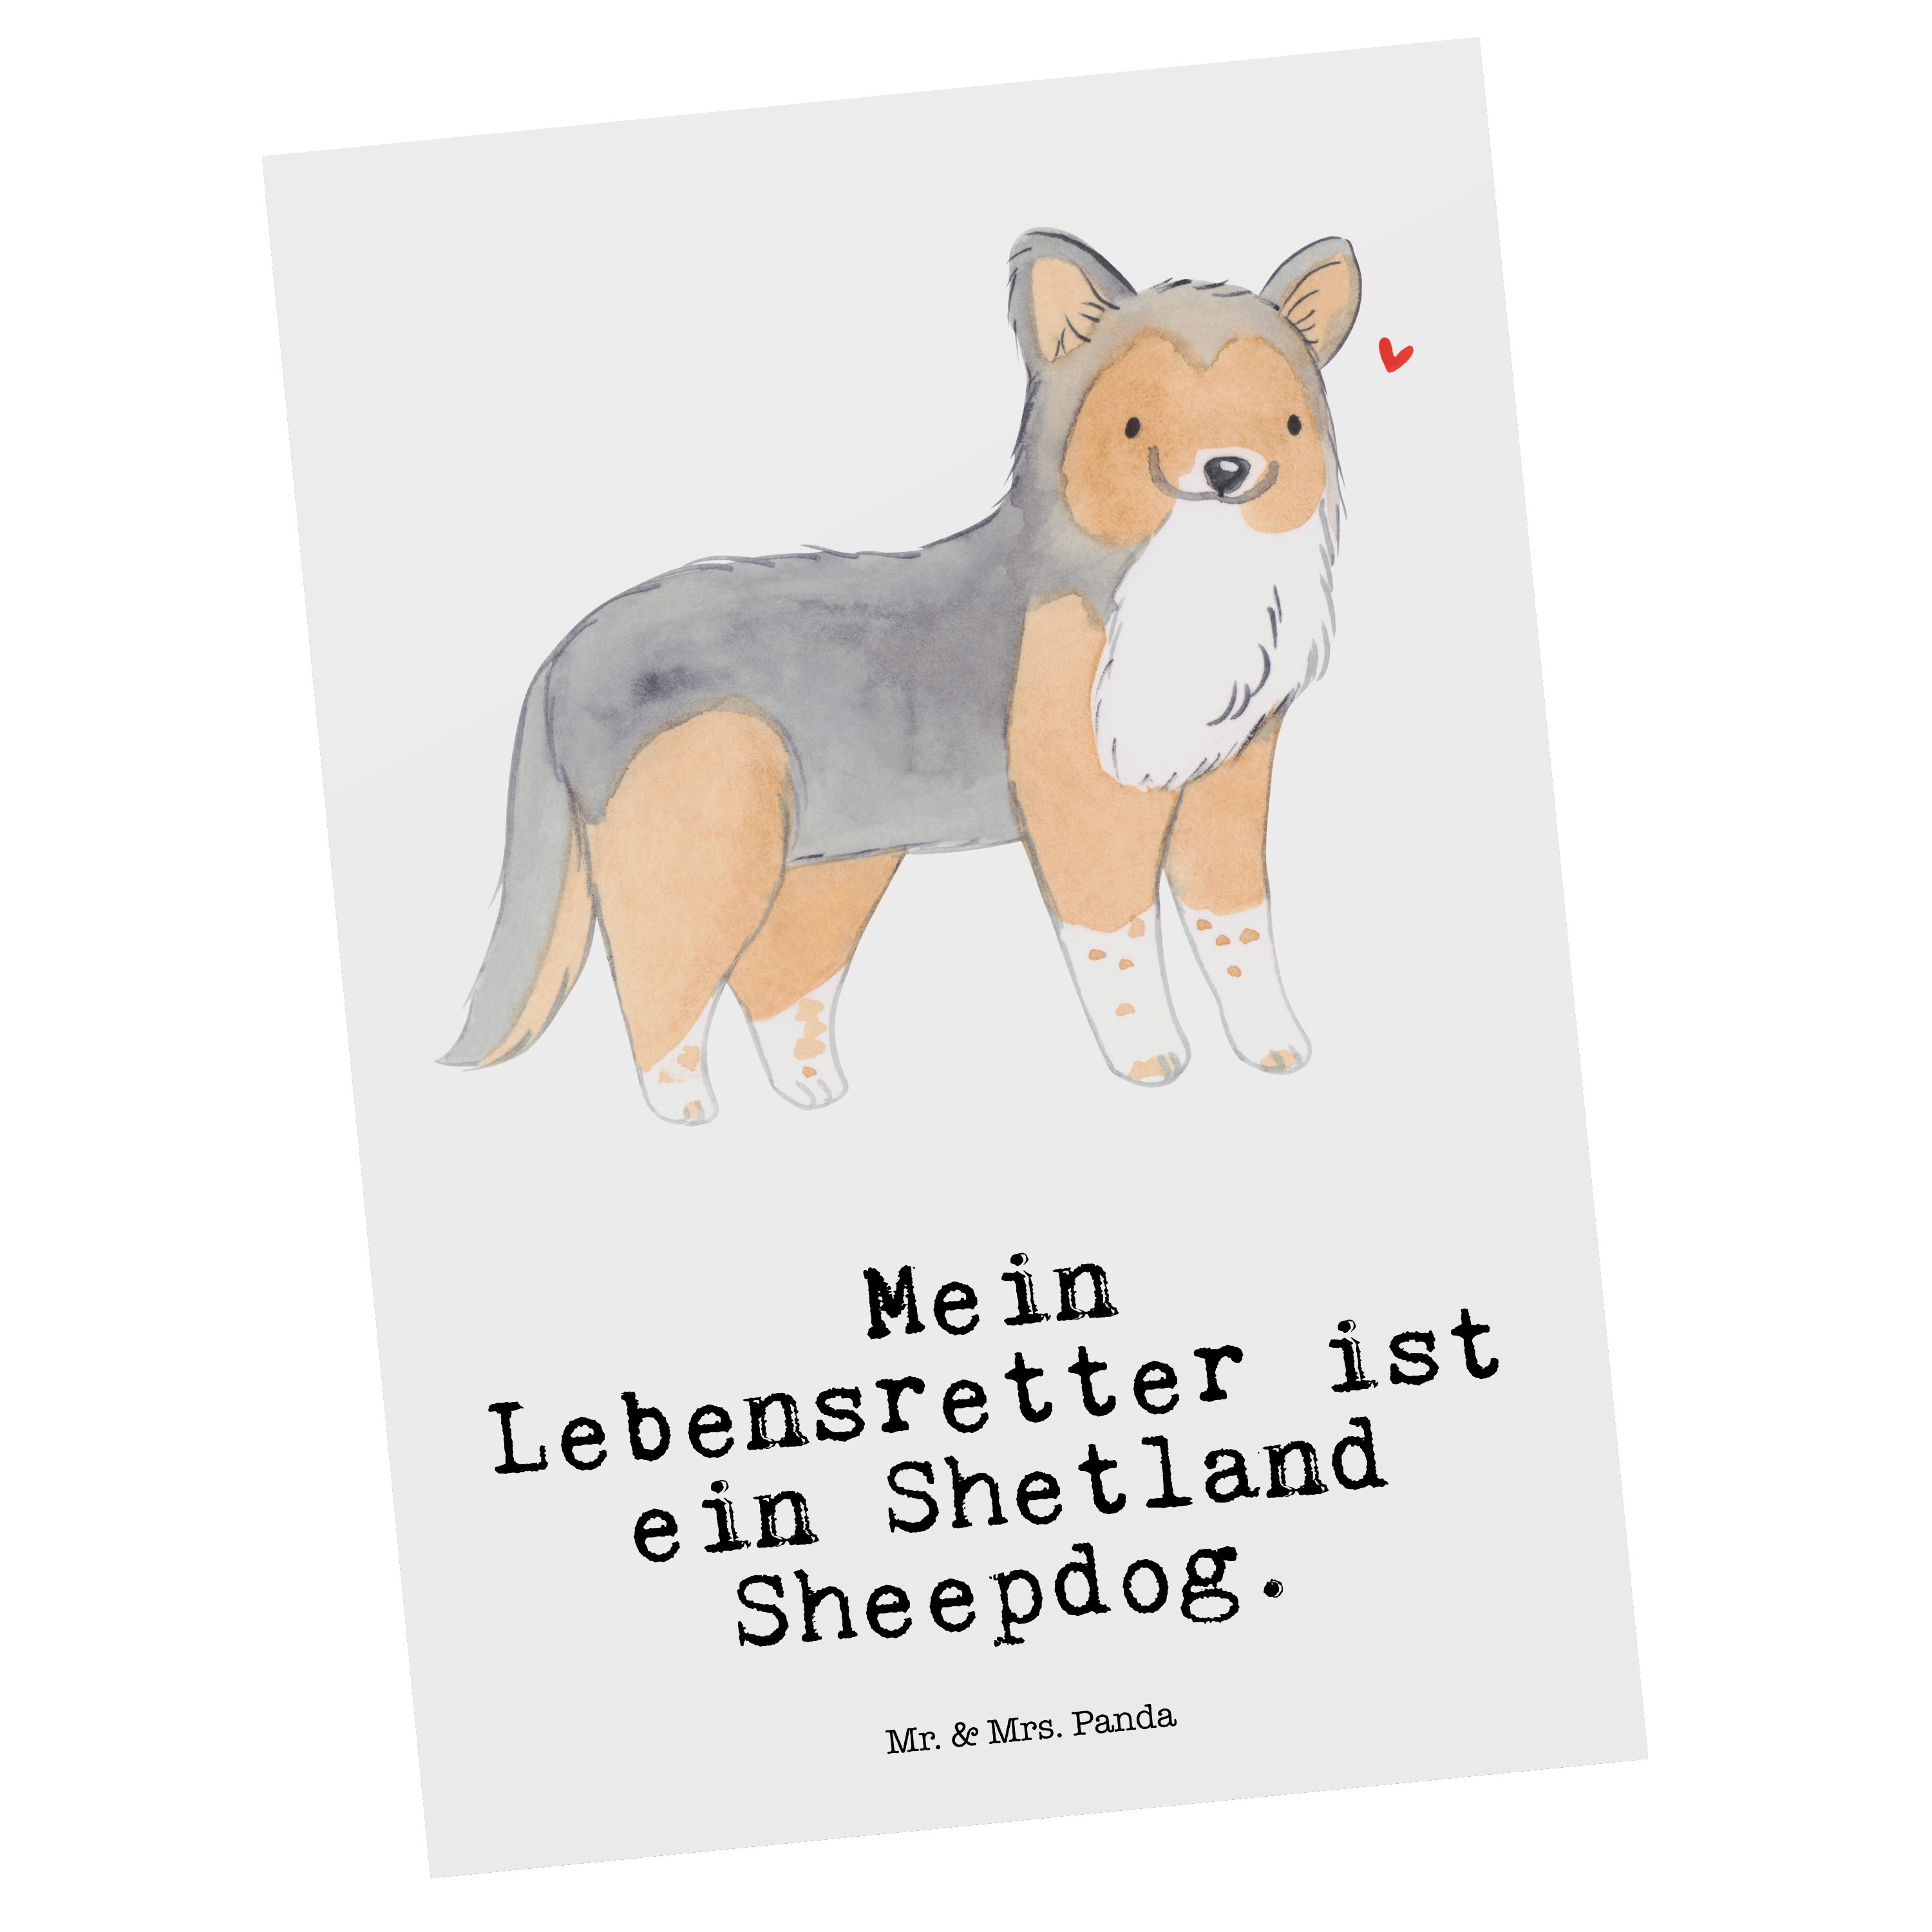 Mr. & Mrs. Panda Postkarte Shetland Sheepdog Lebensretter - Weiß - Geschenk, Rassehund, Karte, H